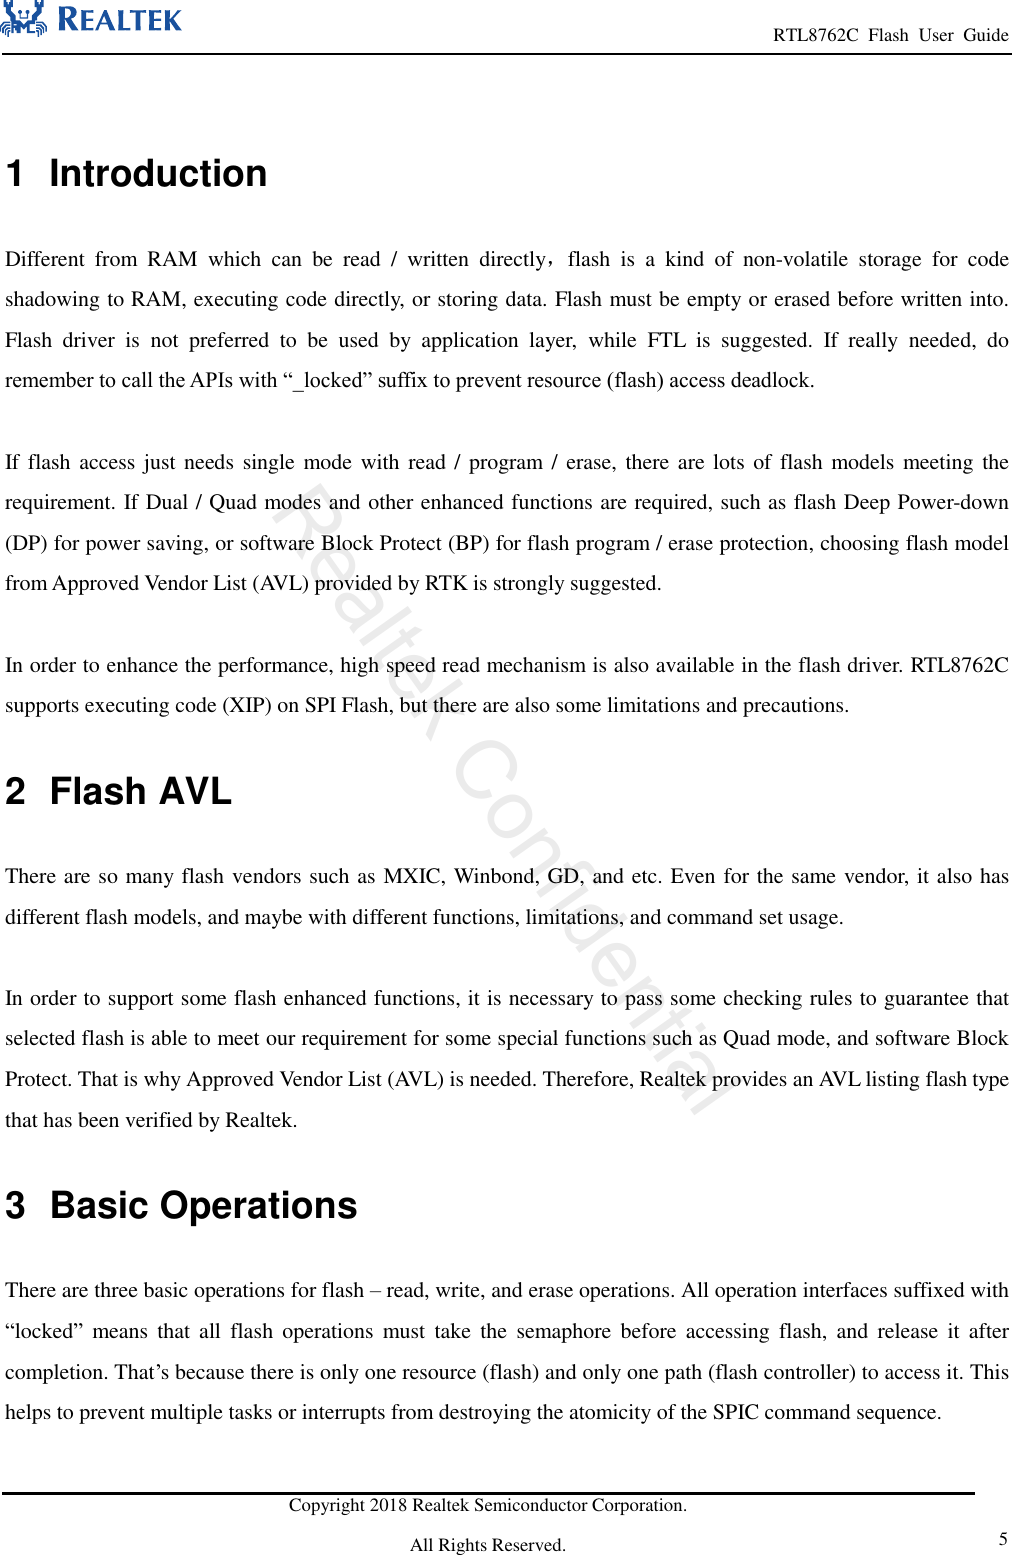 Page 5 of 12 - Flash User Guide RTL8762C EN